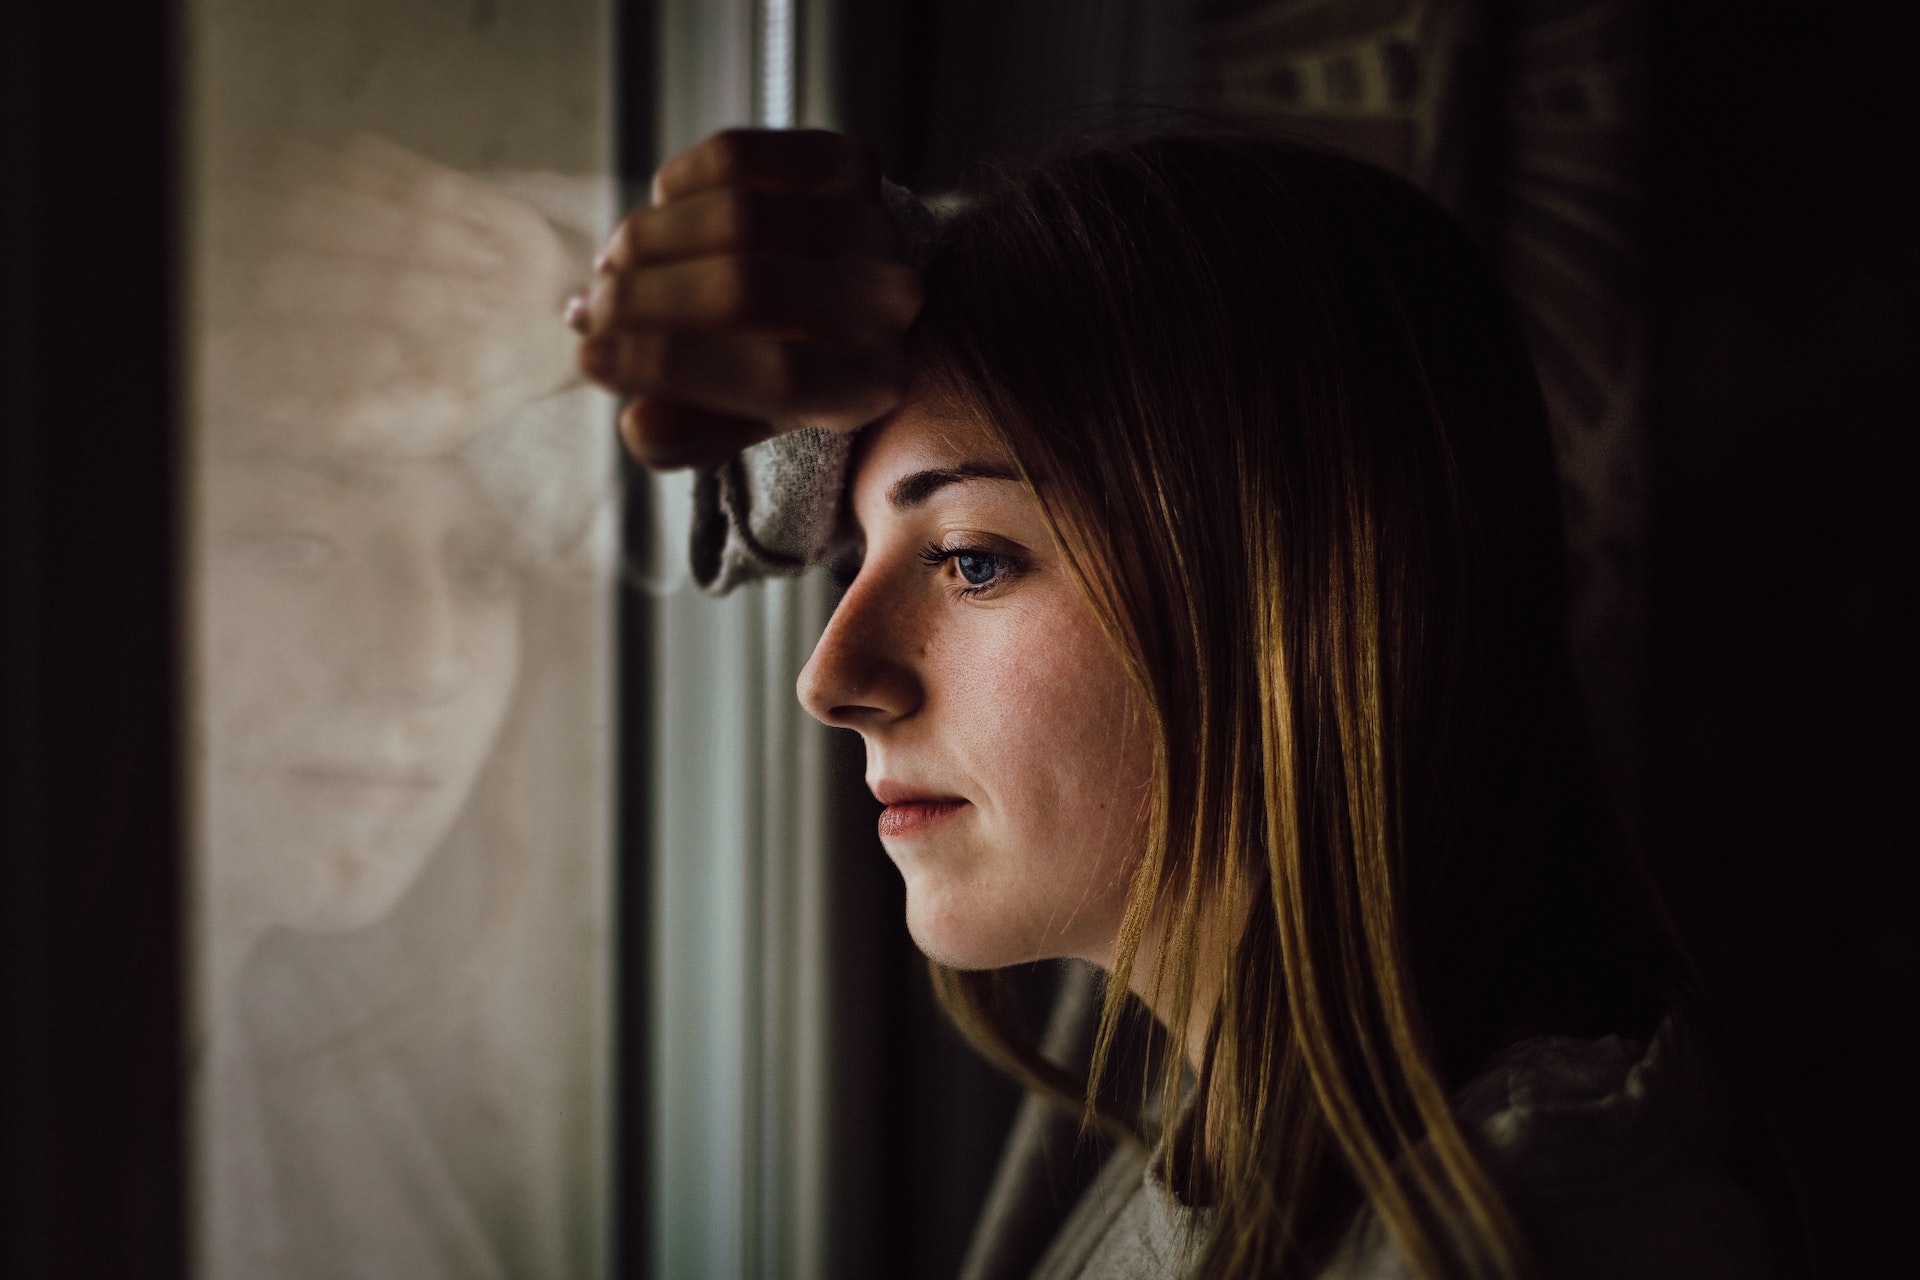 A woman looking outside a window | Source: Pexels